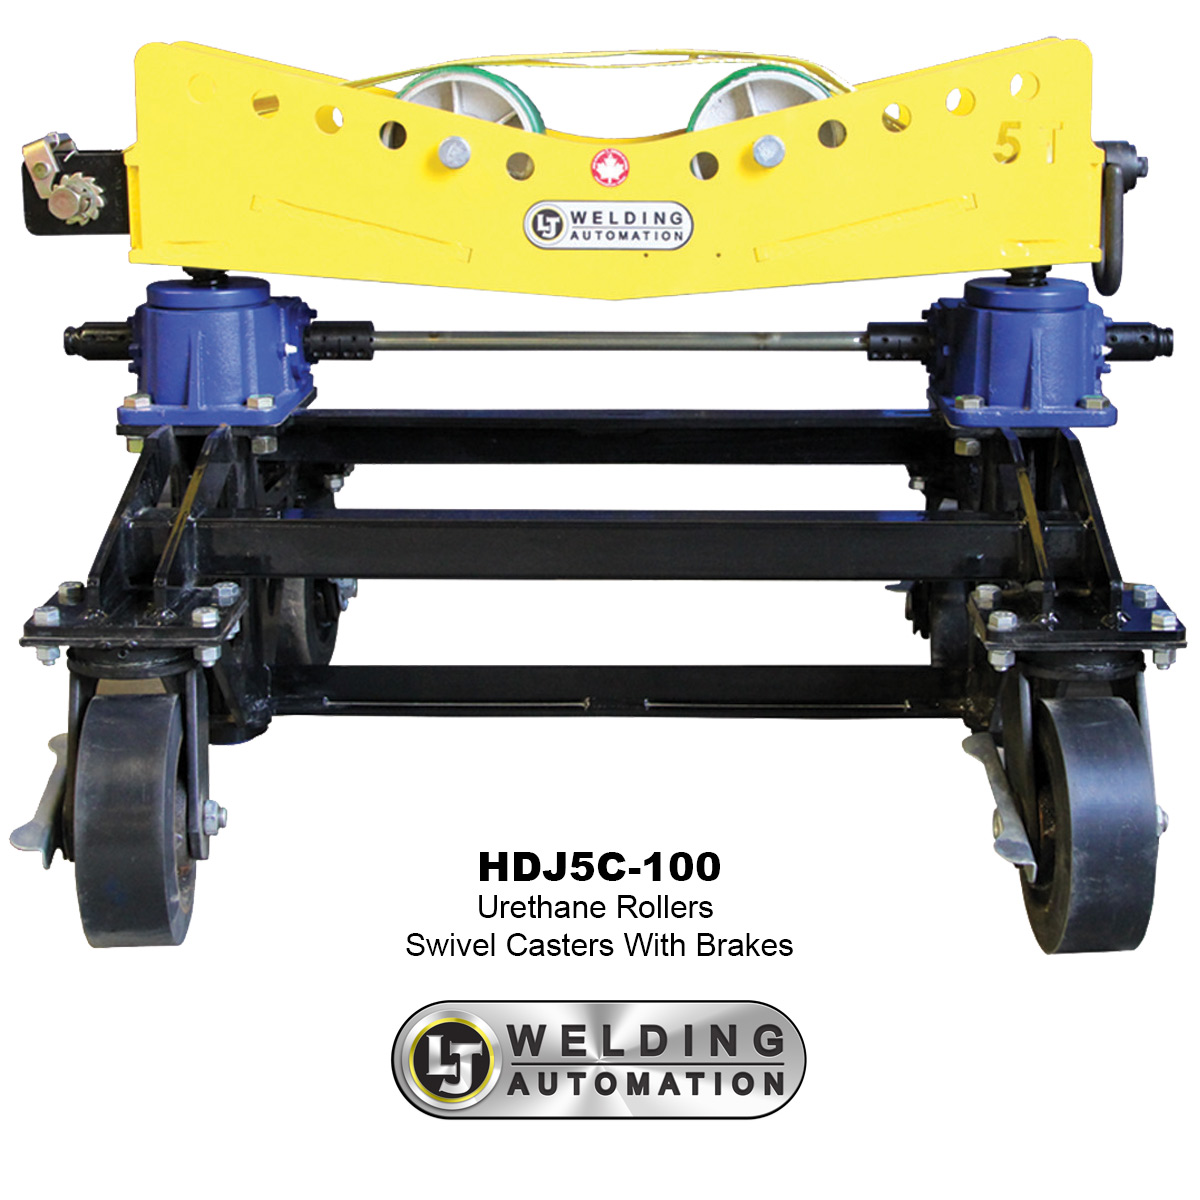 HDJ5C-100 pipe stand welding